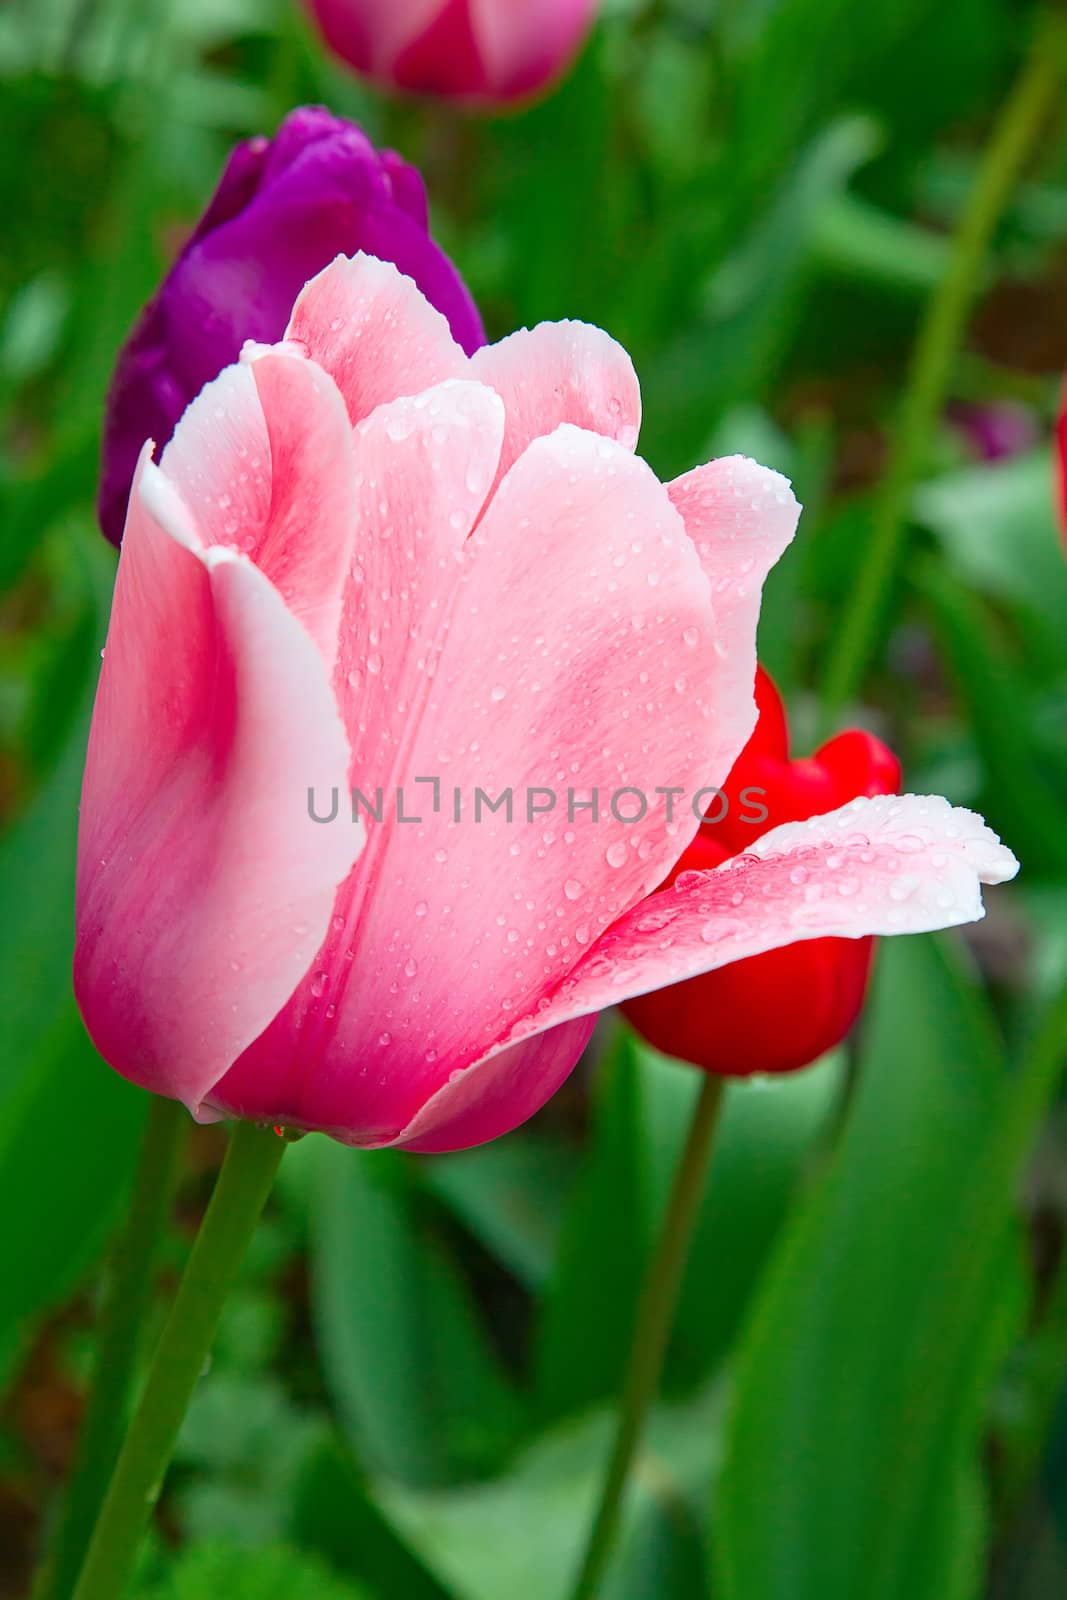 Tulips by swisshippo